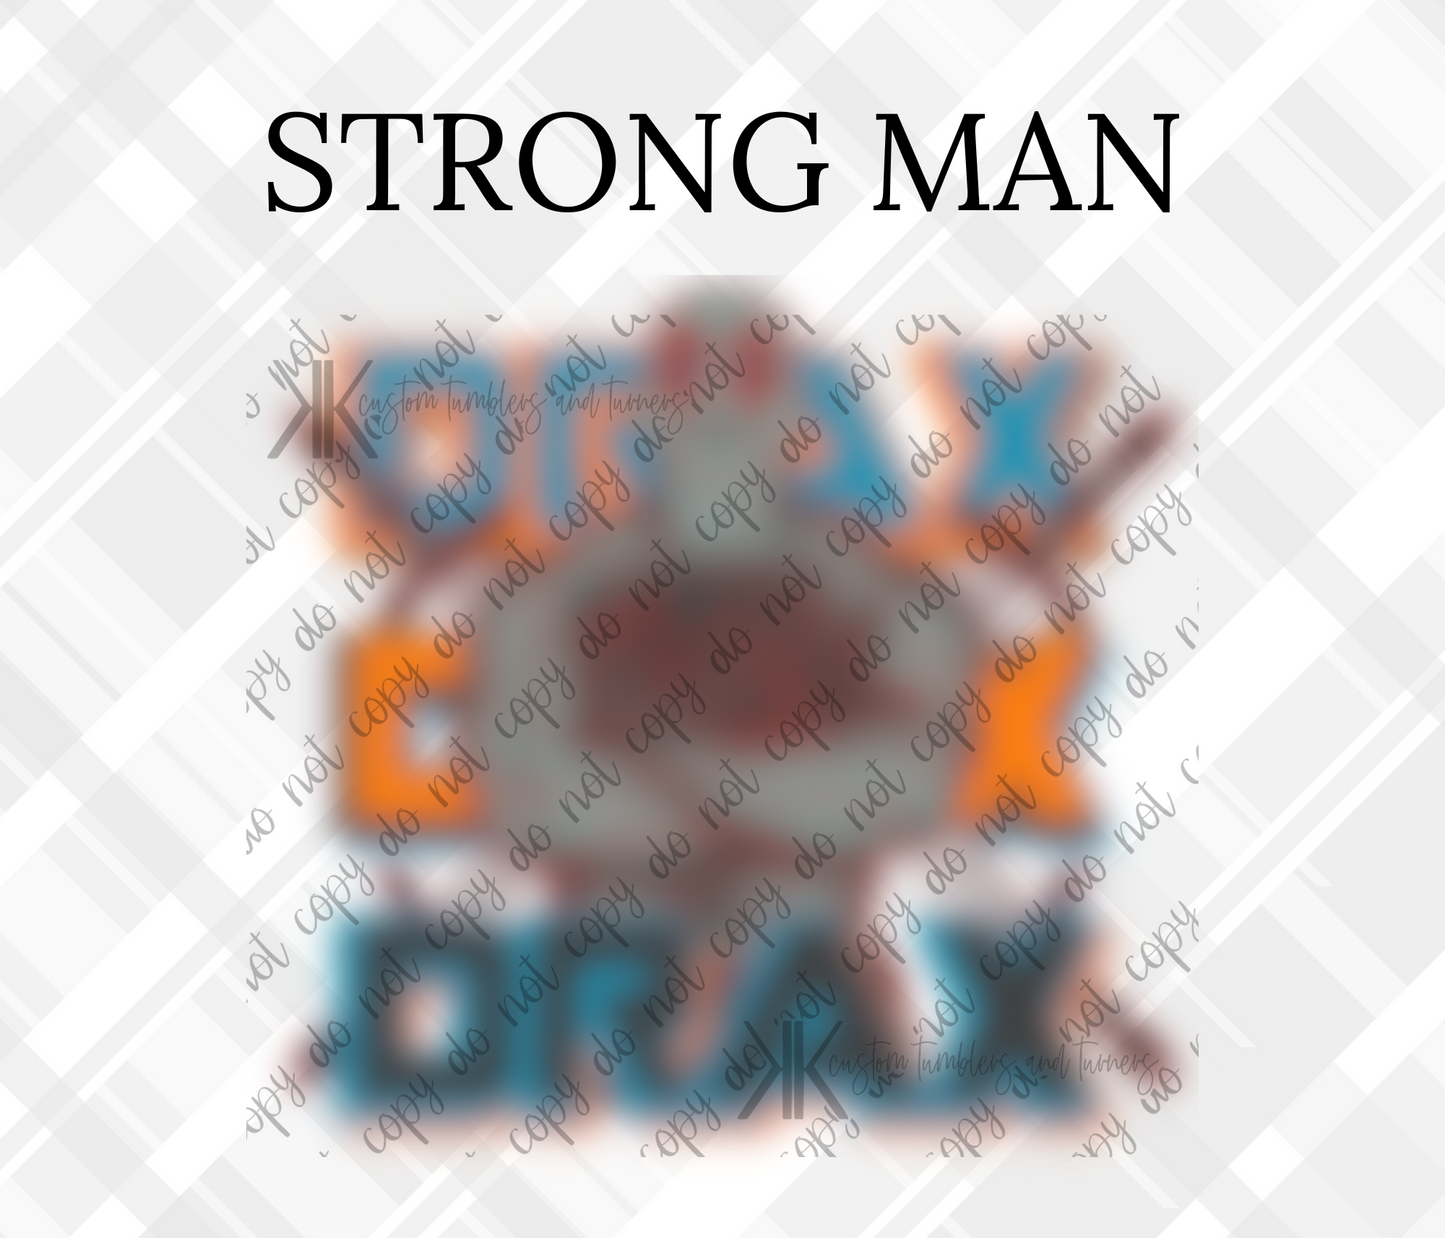 STRONG MAN